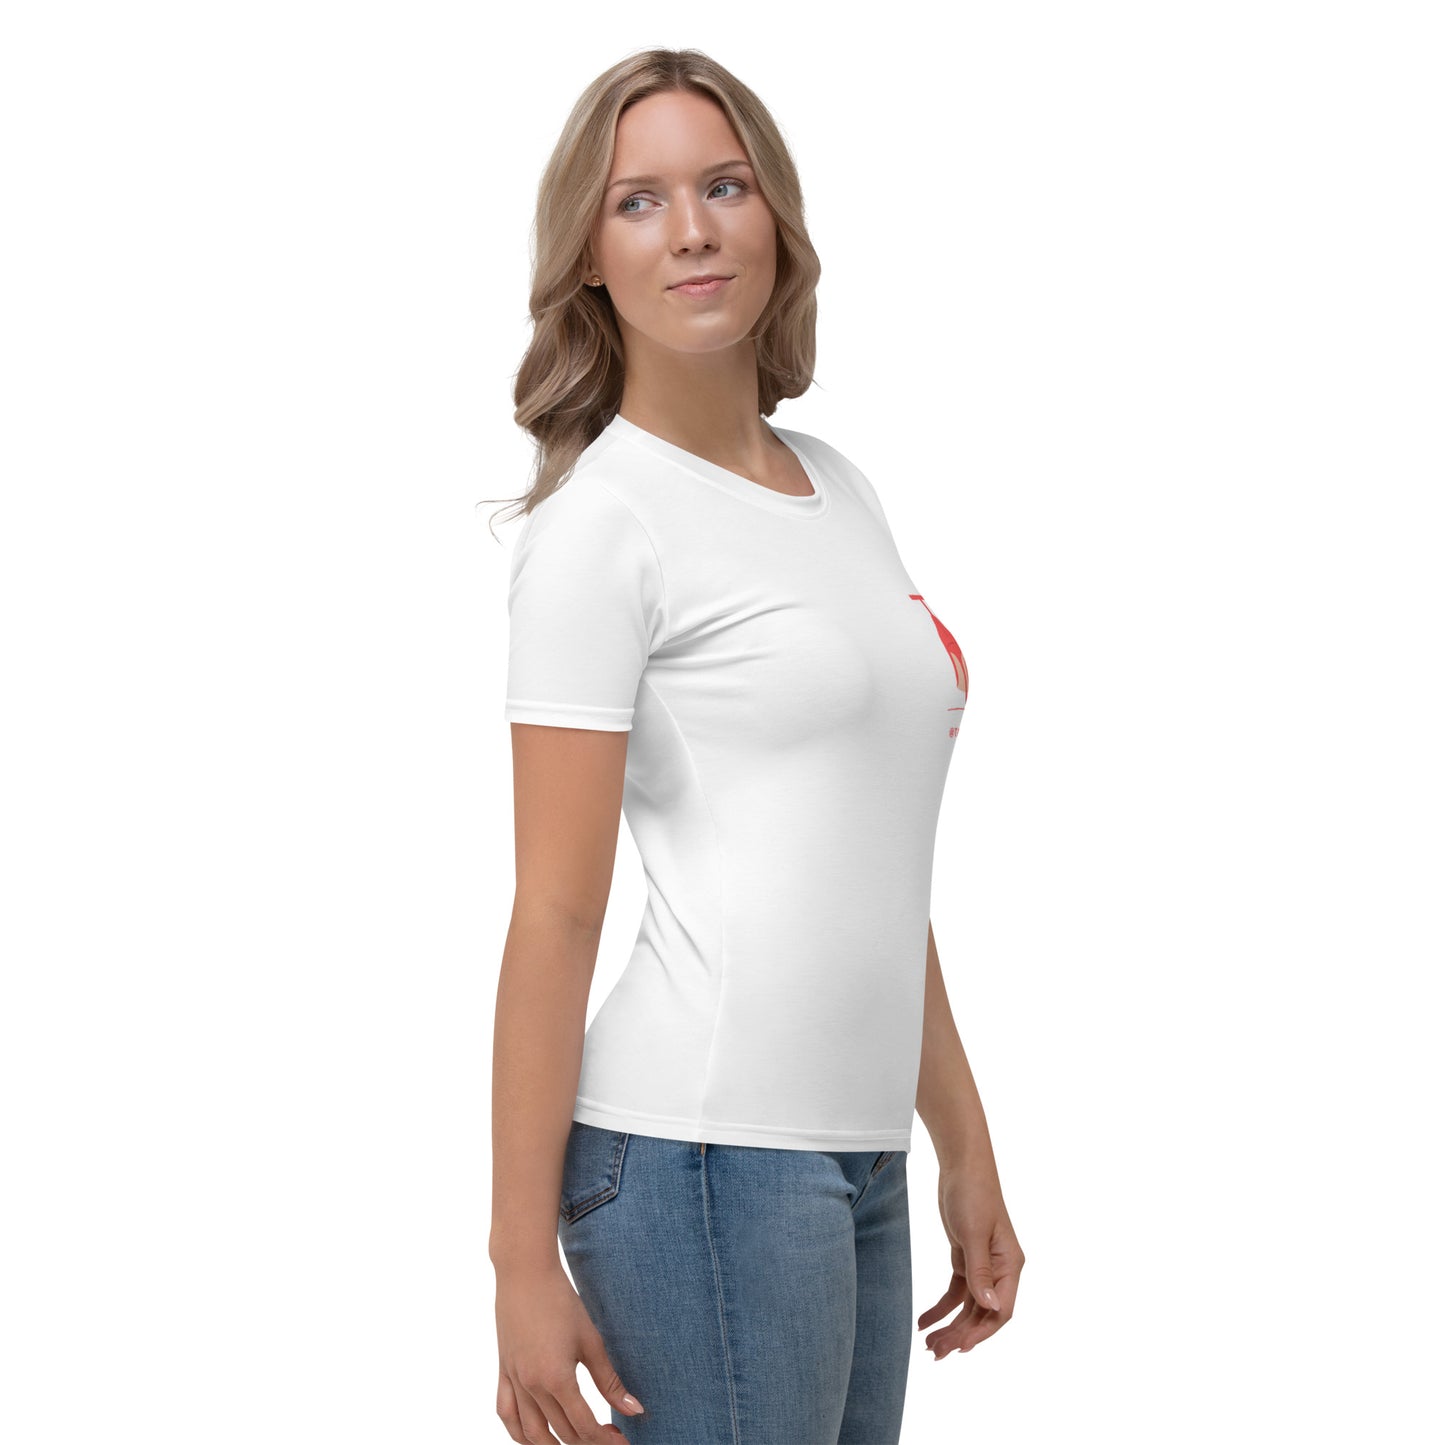 "Tacones Sabios" Women's T-Shirt (Side Front)